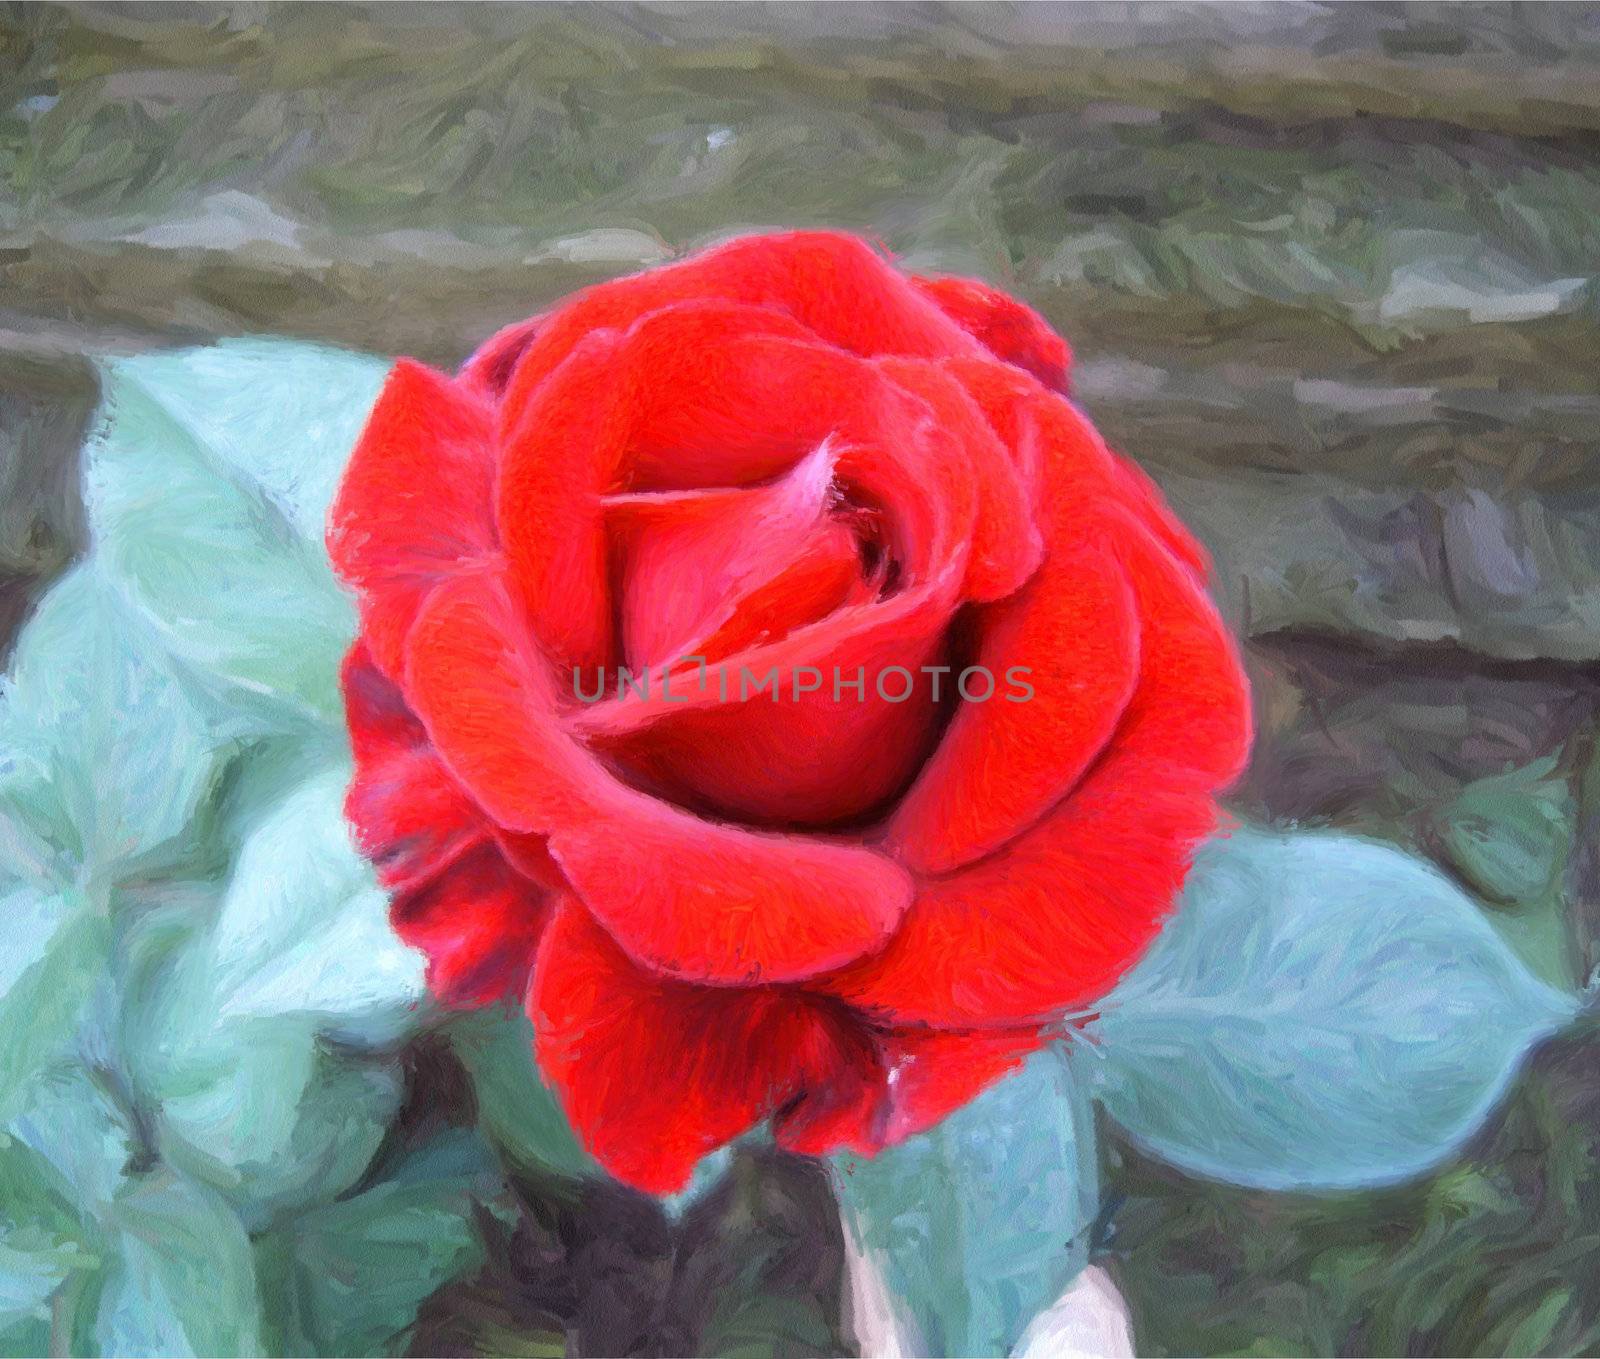 Rose by whitechild